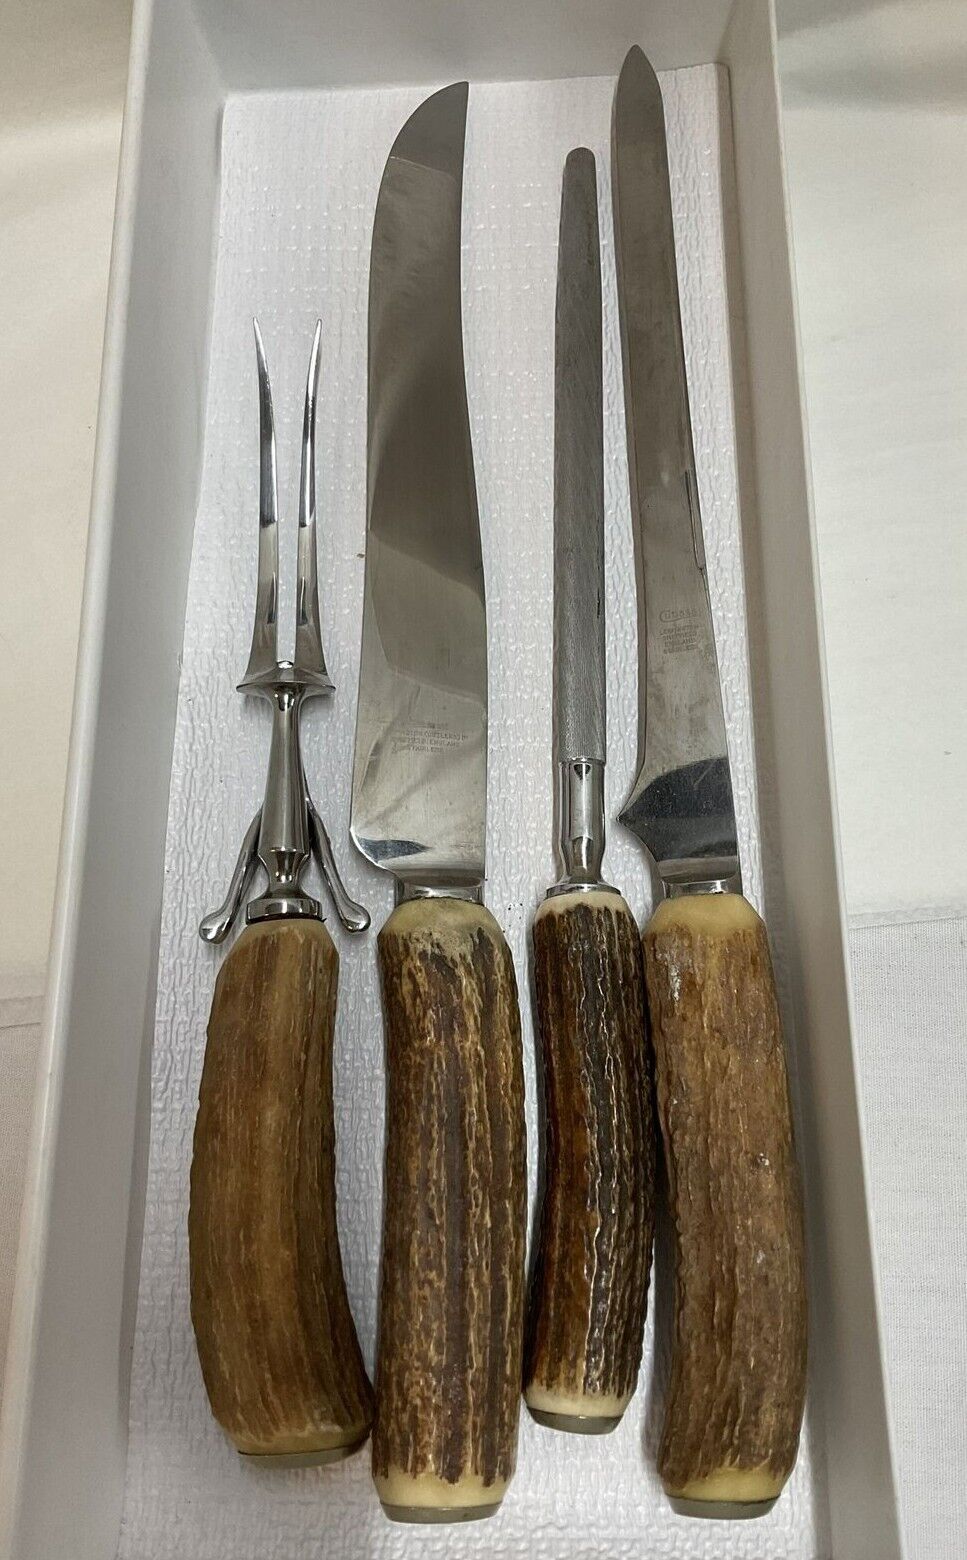 Cutlass Leppington Sheffield England 4 PC Vintage Carving Knife Cutlery Set